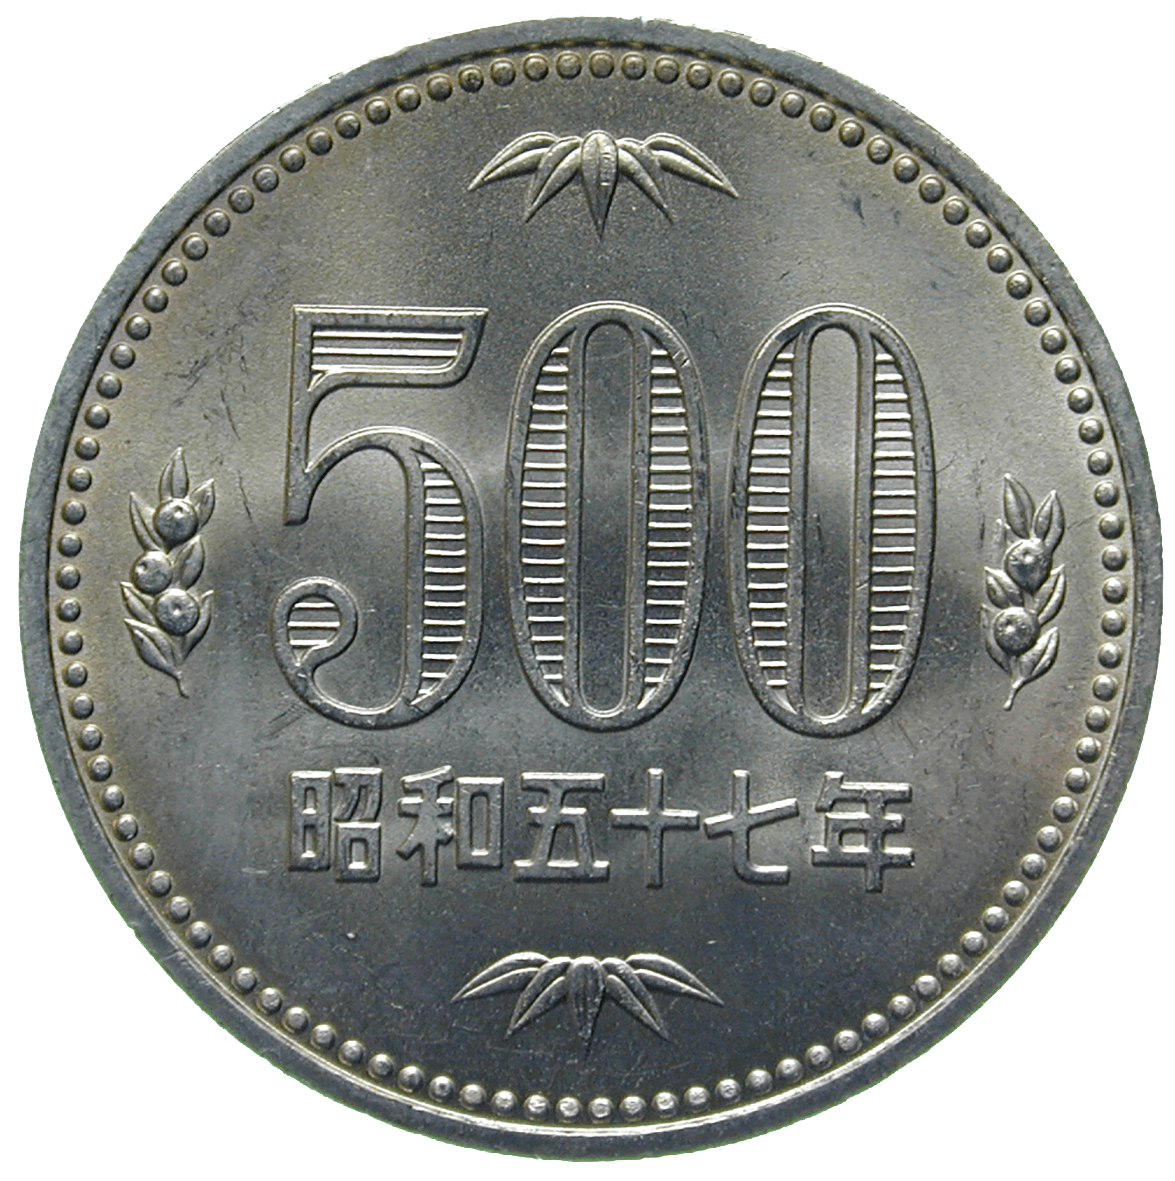 Japanese Empire, Showa Period, Hirohito, 500 Yen 1982 (obverse)